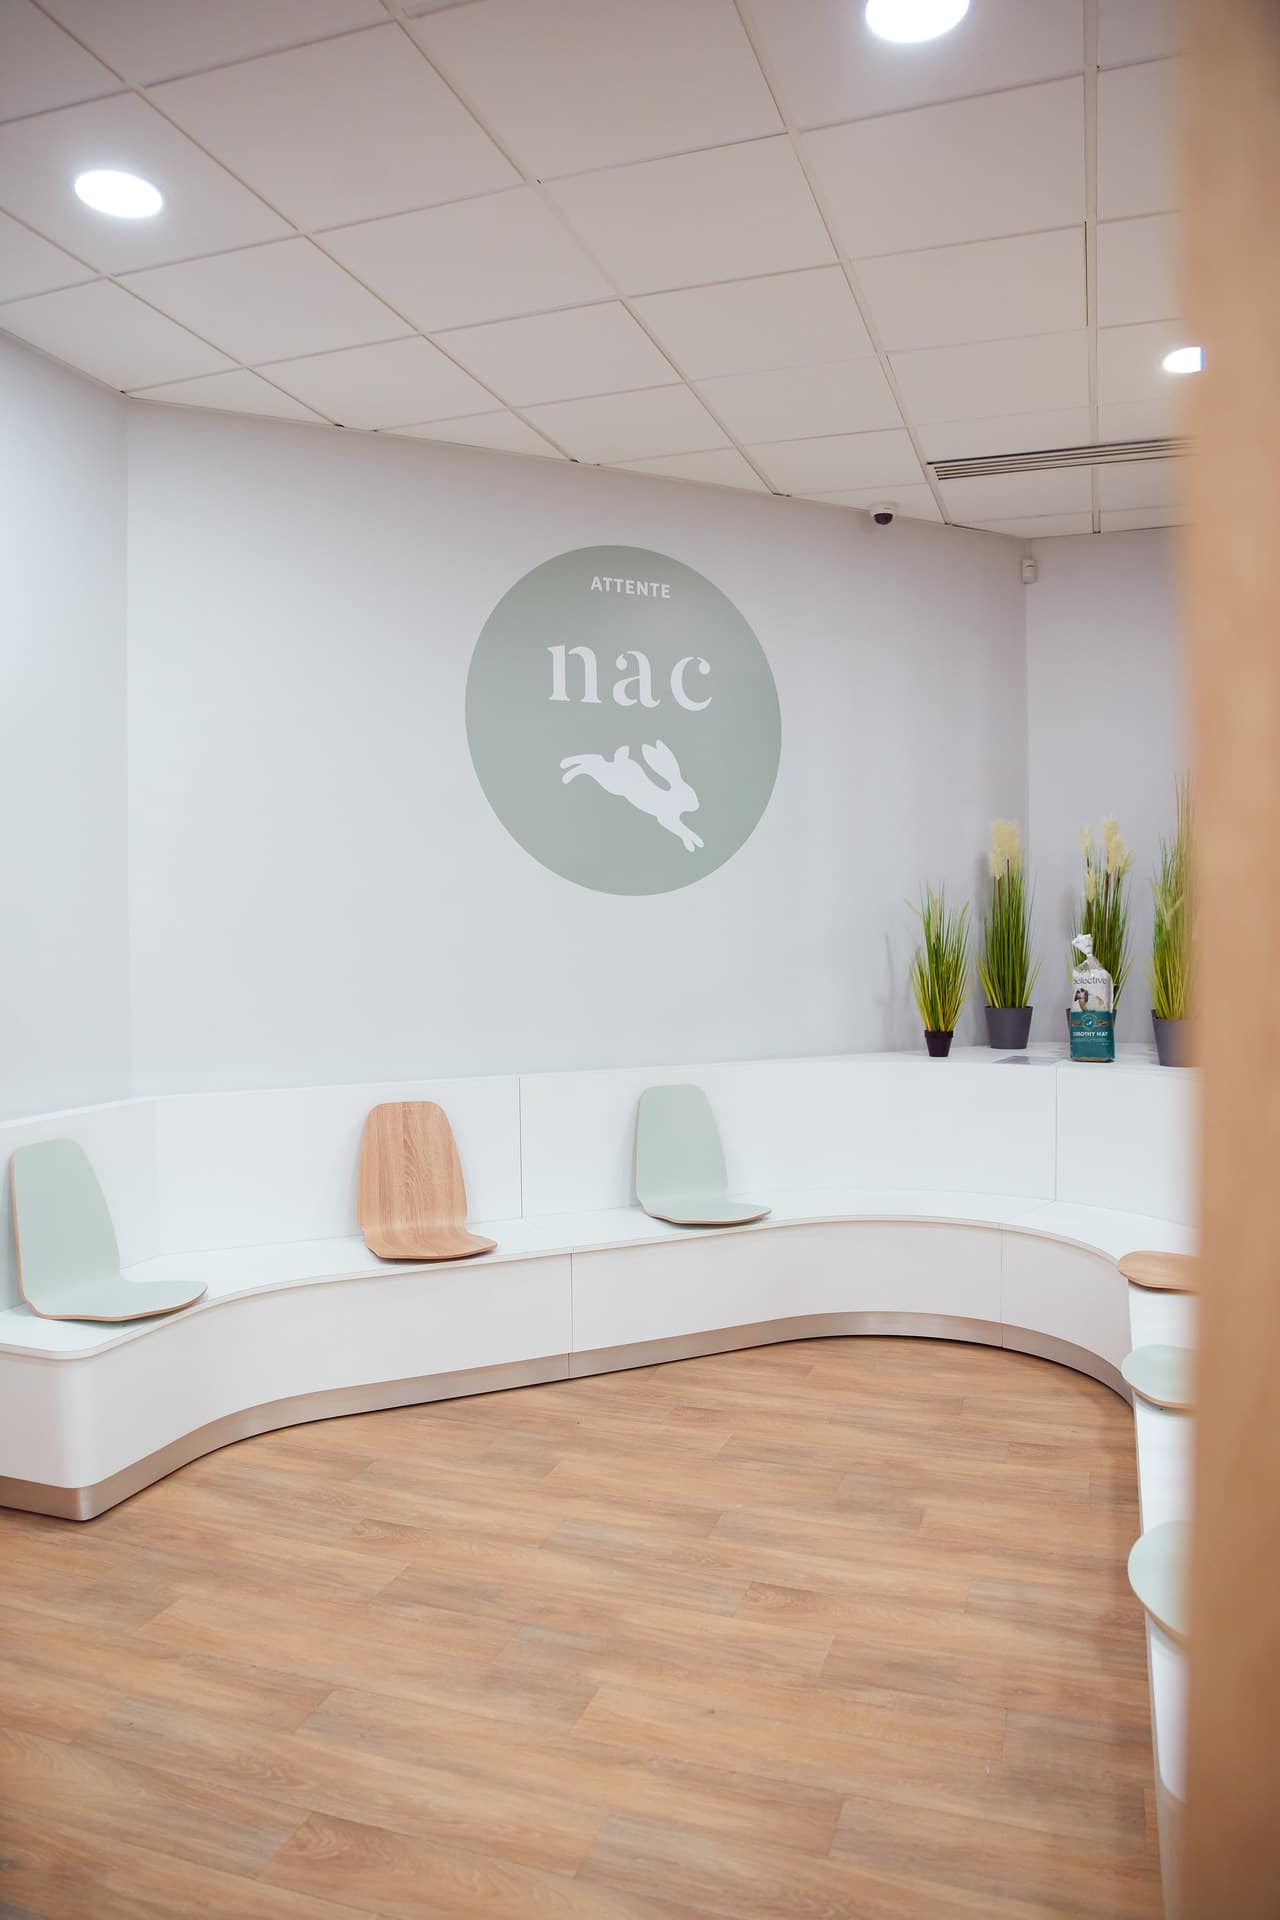 NAC salle attente clinique val europe - NAC